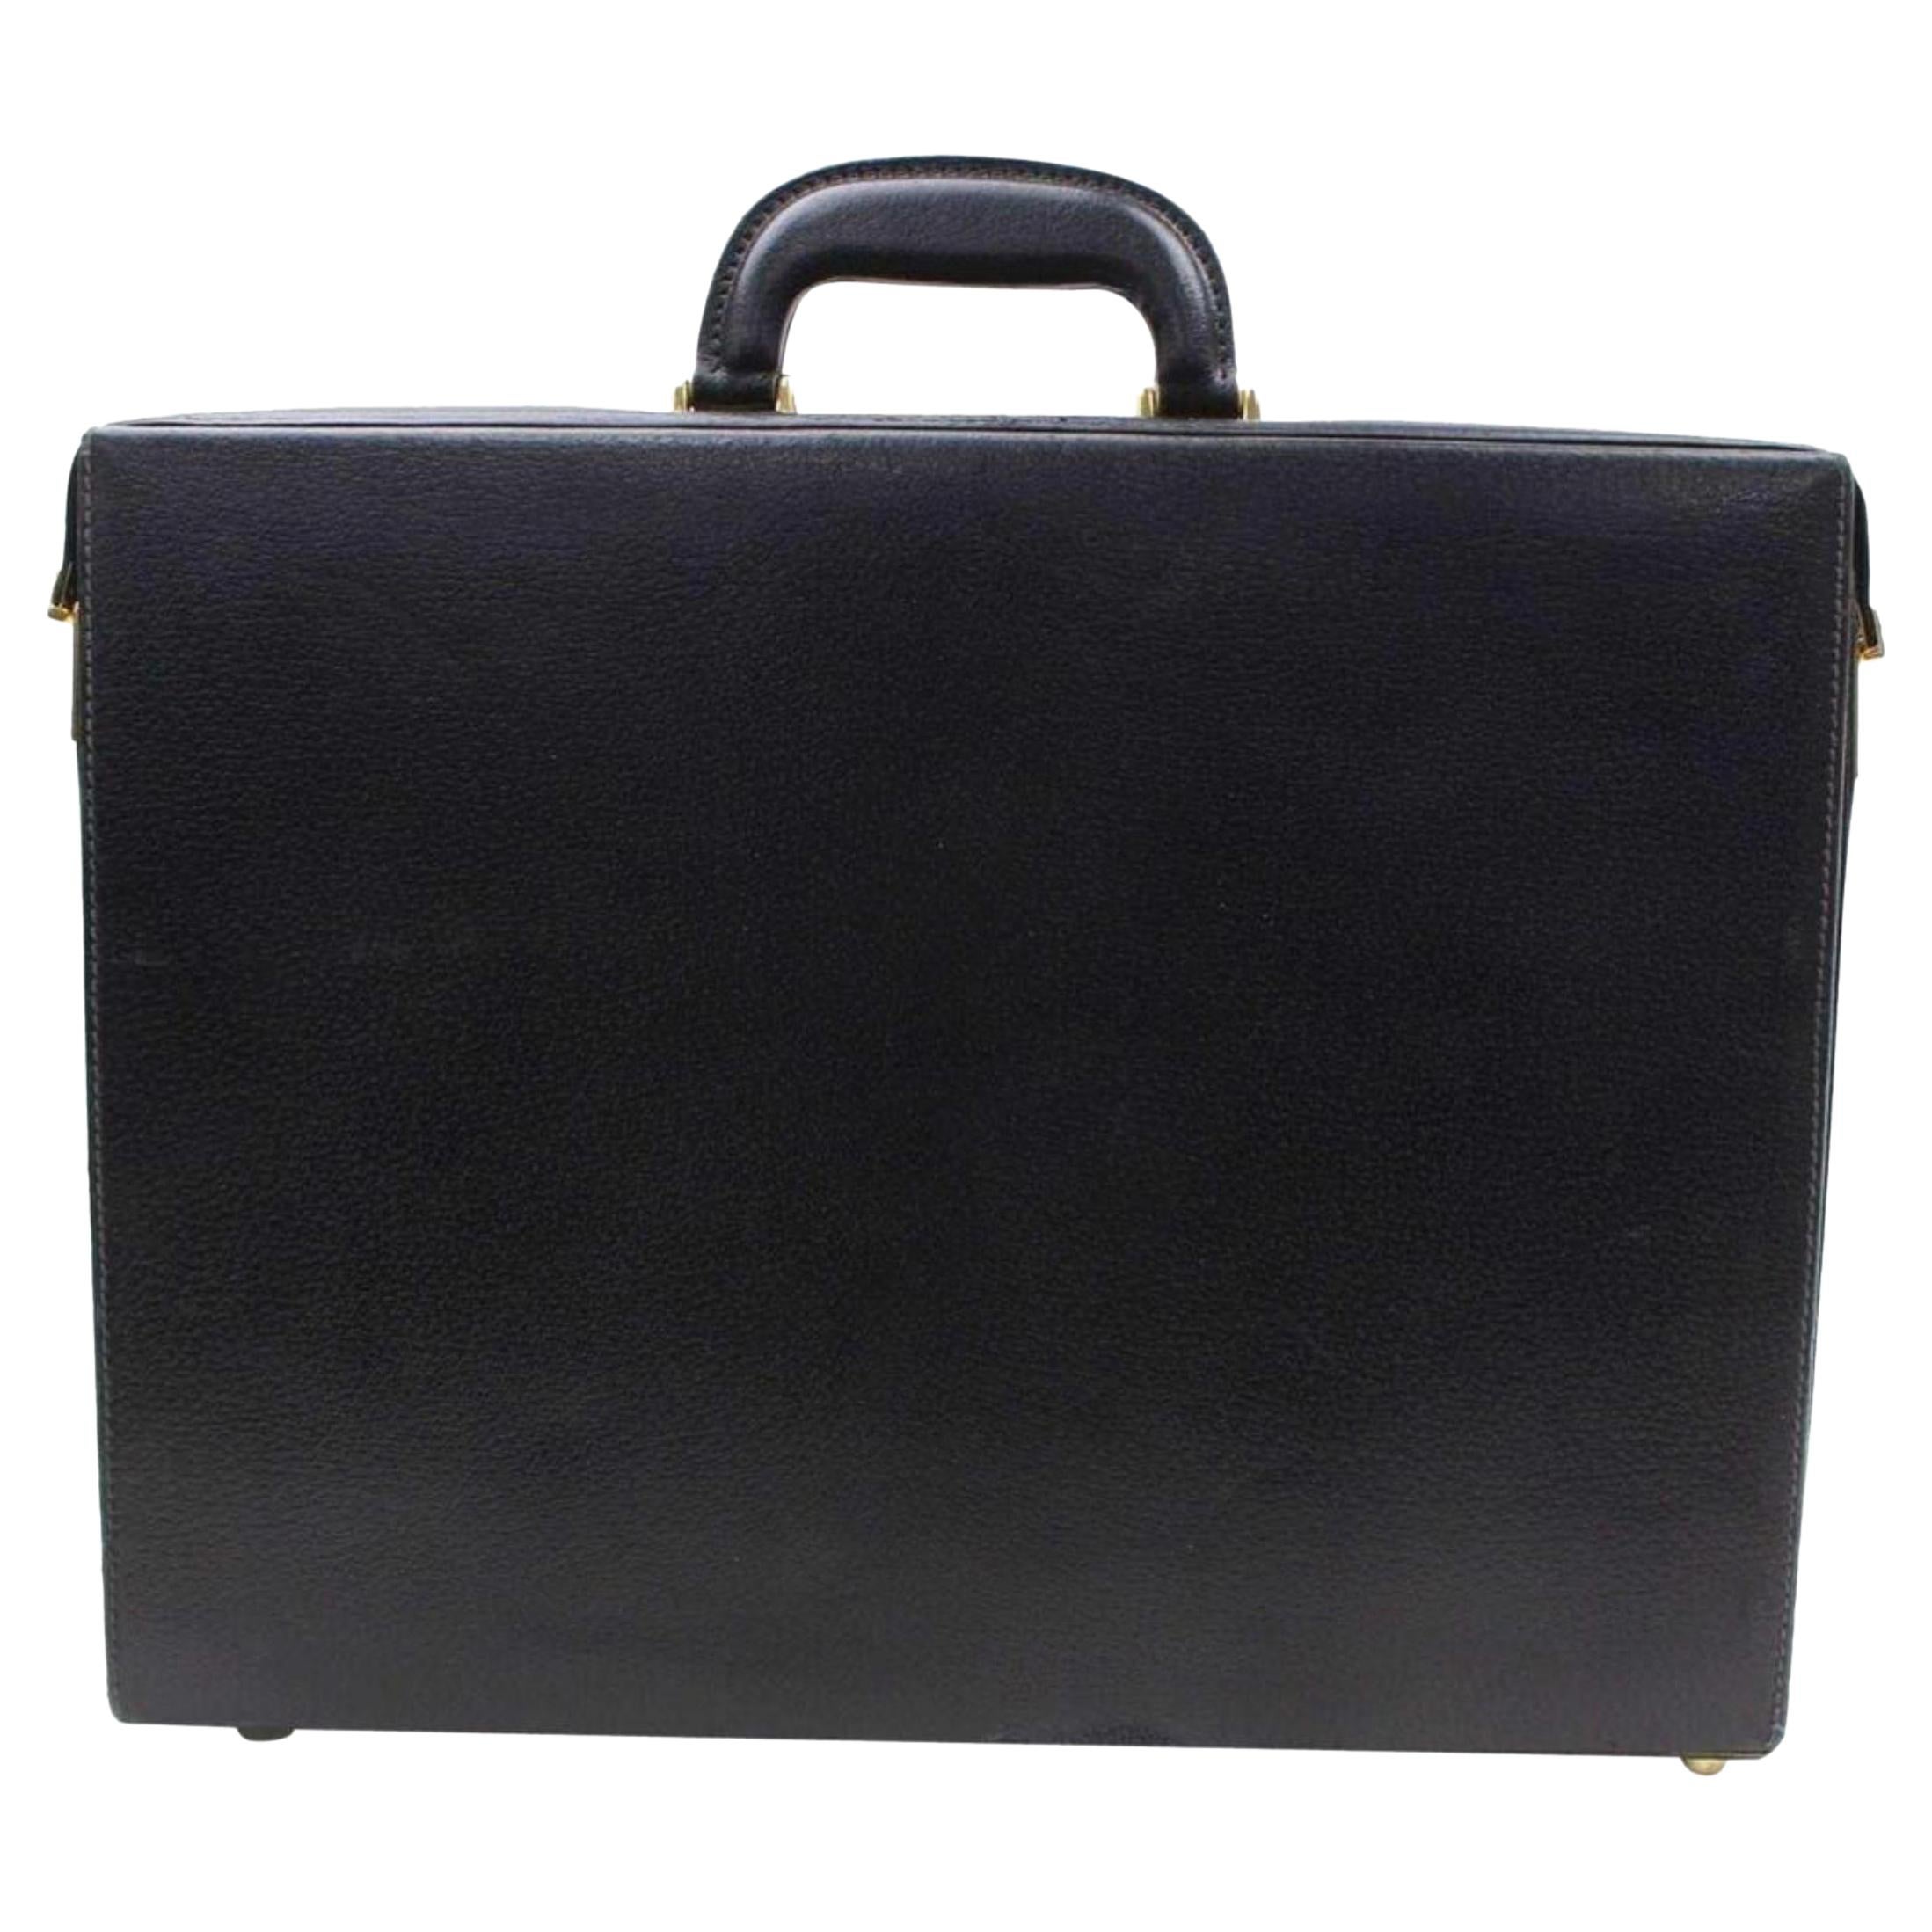 Gucci Attache Briefcase 866215 Black Leather Laptop Bag For Sale